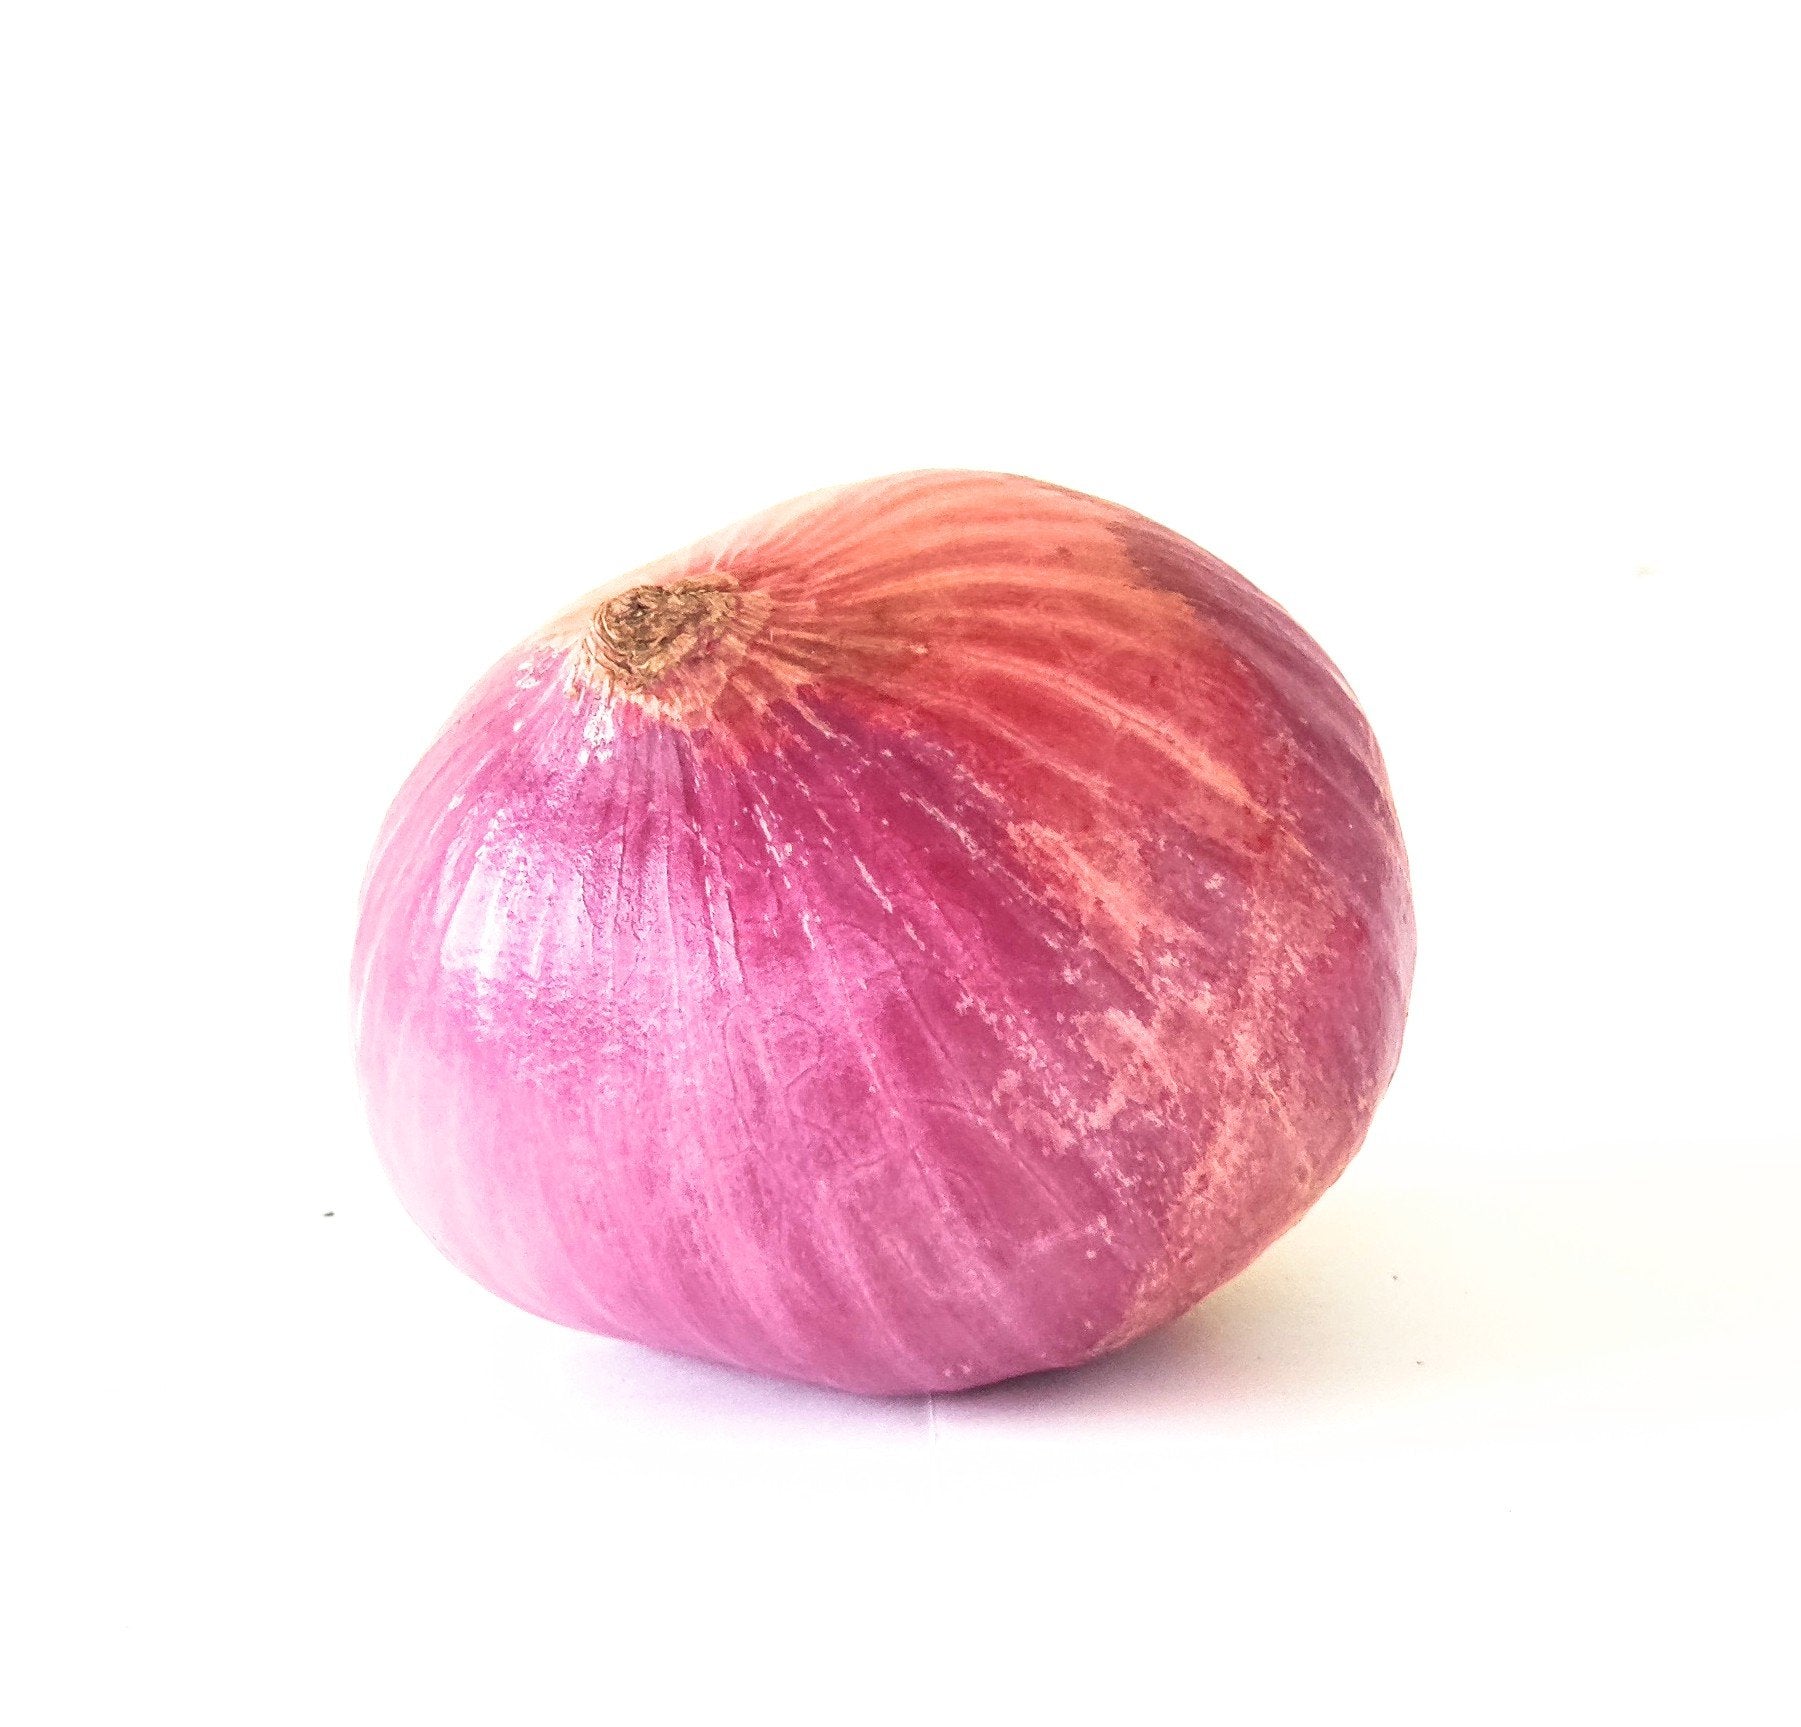 1 kilogram pack of onions, local